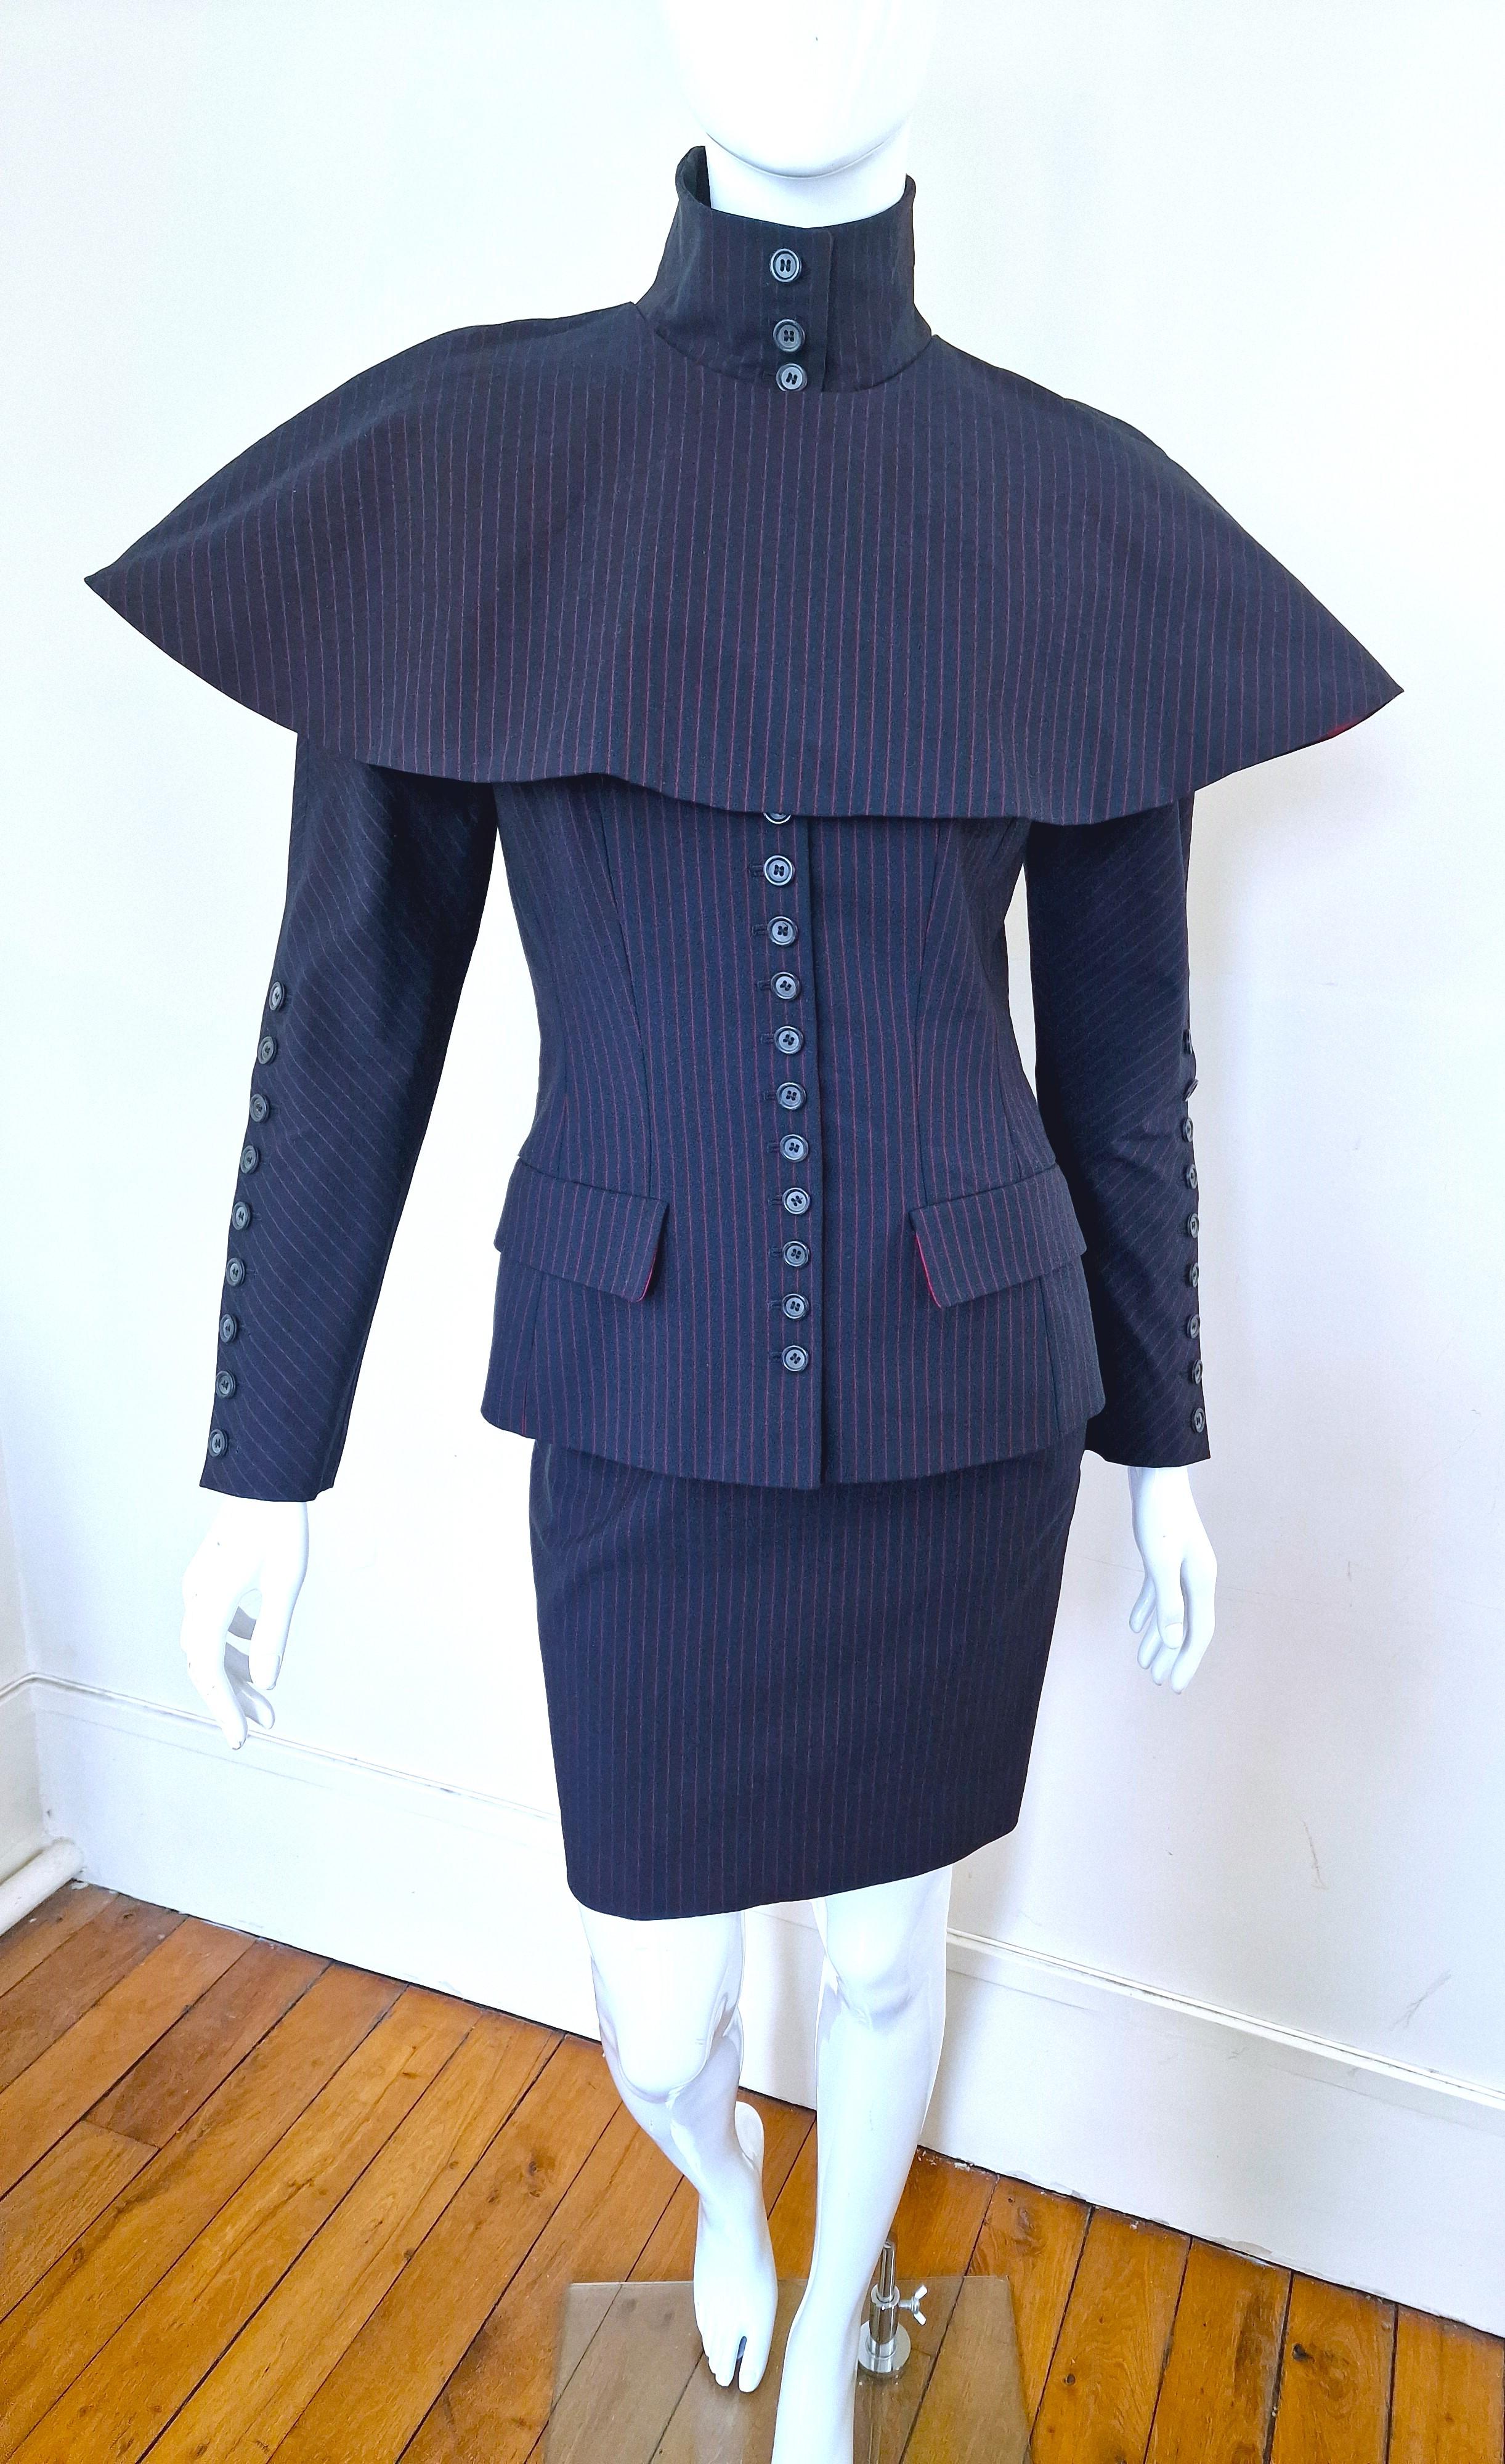 Women's Early Alexander McQueen Joan of Arc Cape 1998 AW98 Runway Collar Dress Suit  For Sale